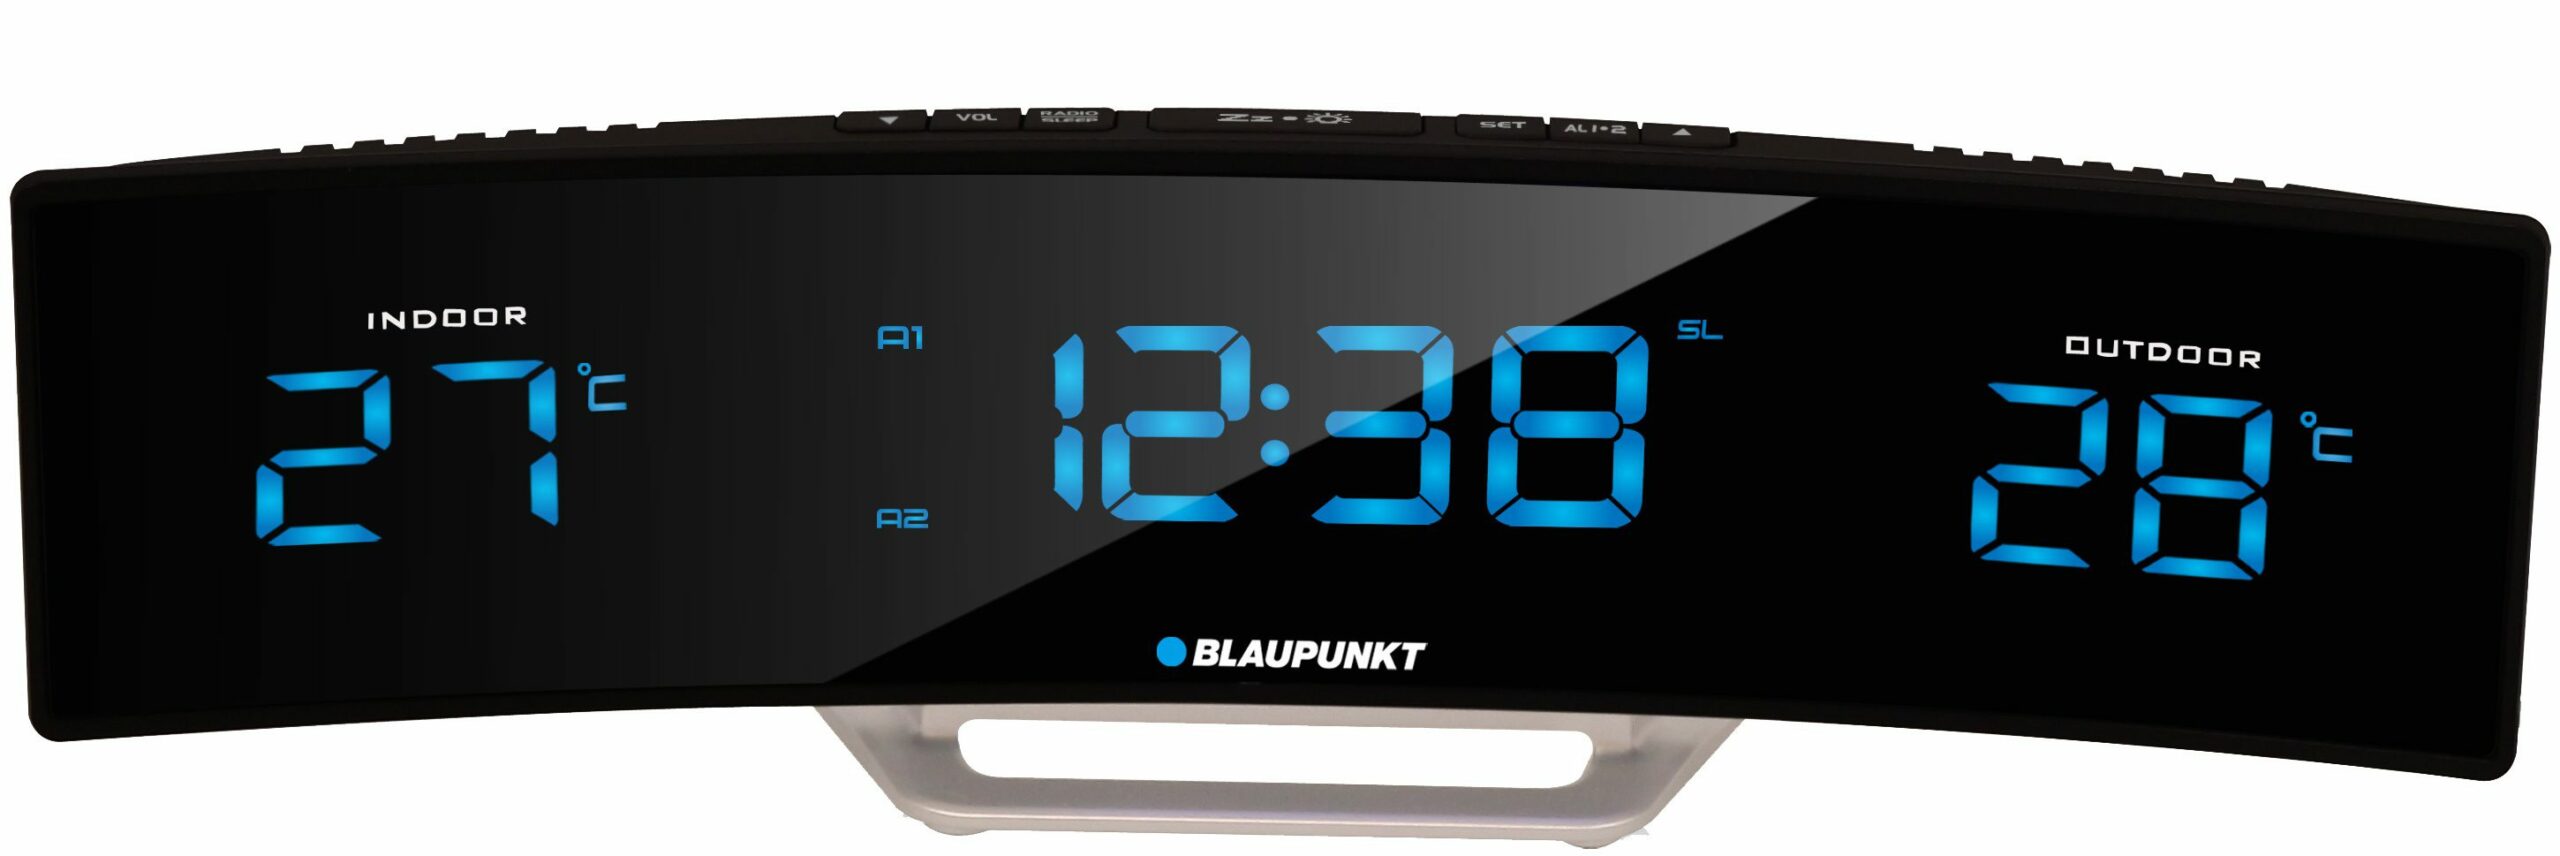 BLAUPUNKT CR12BK CLOCK RADIO WITH INDOOR AND OUTDOOR TEMPERATURE